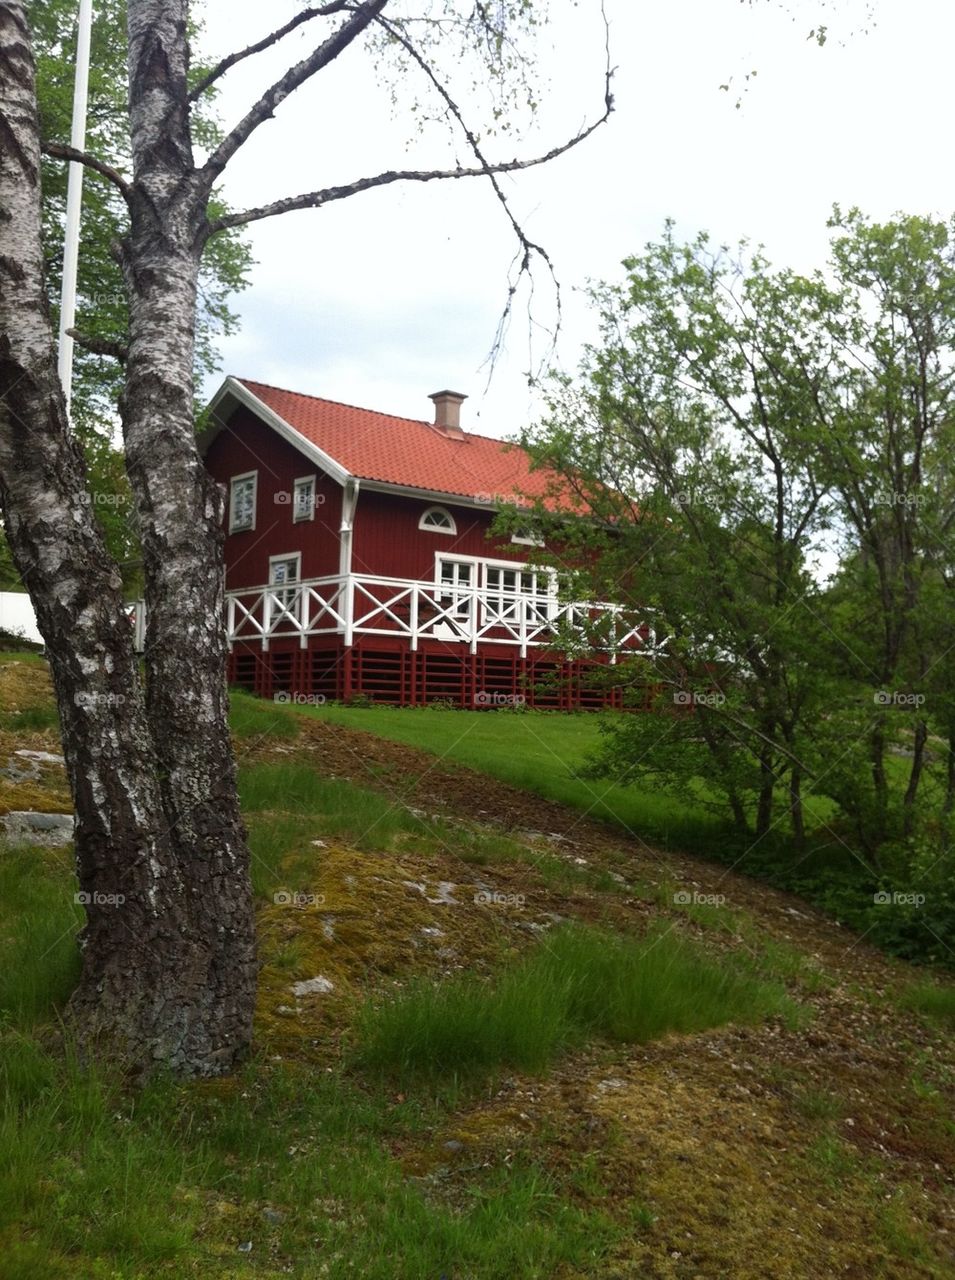 sweden garden trees houses by stellana100